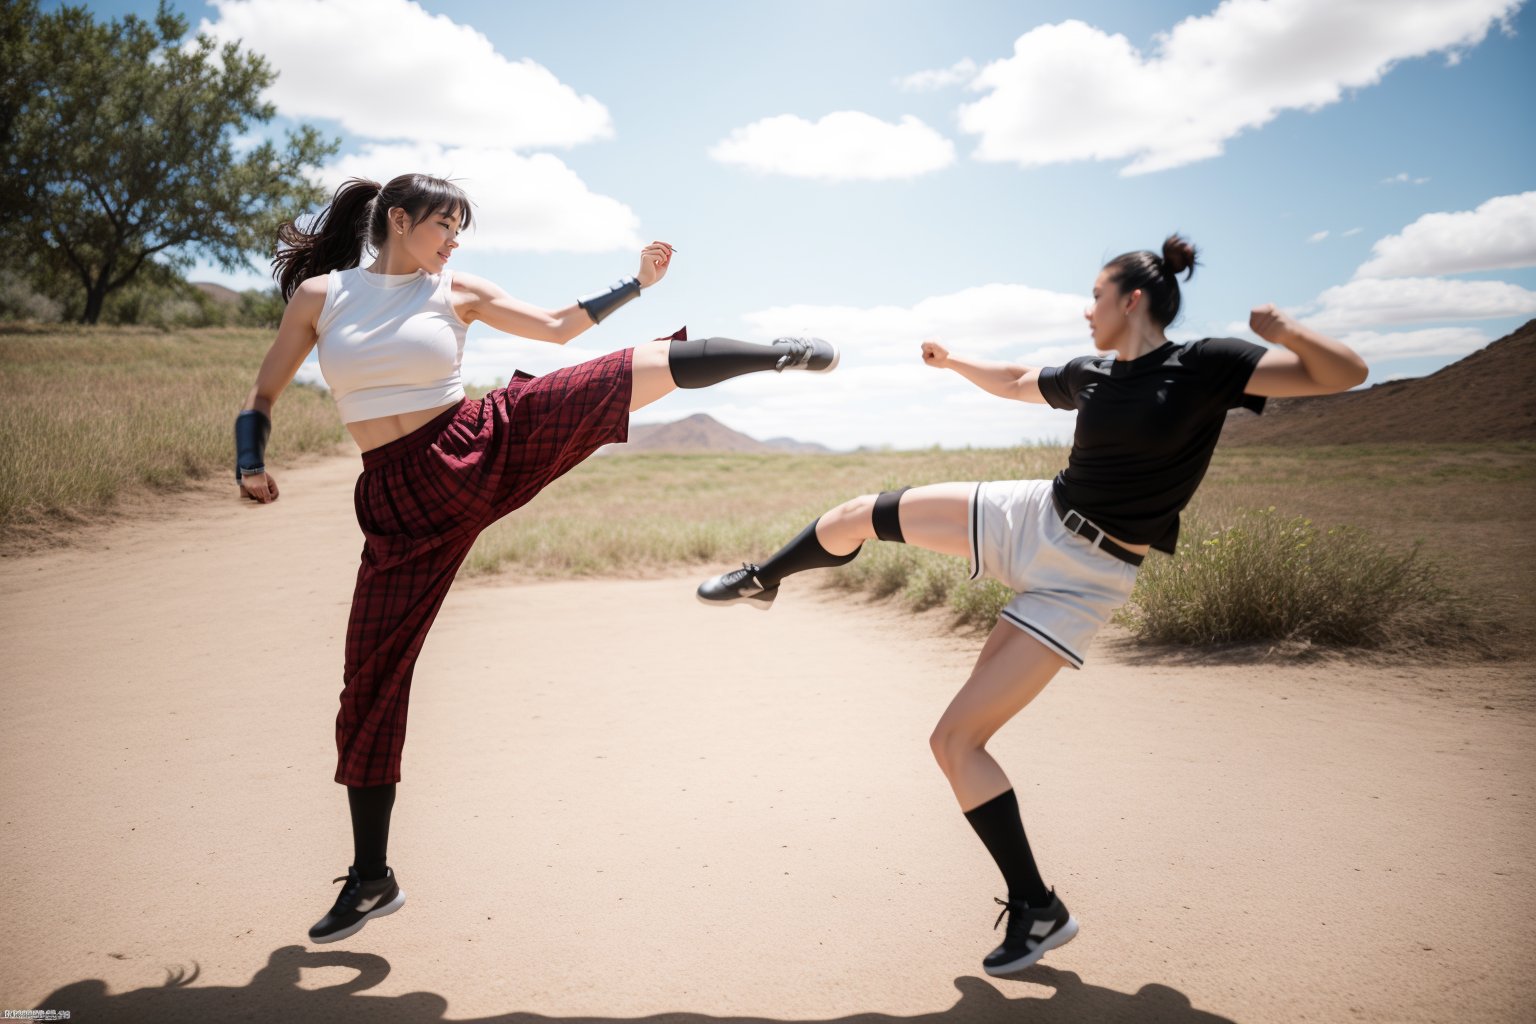 waifu fighting waifu, jump kick, impact reaction 1 versus 1perfect,Detailedface,photorealistic,milf